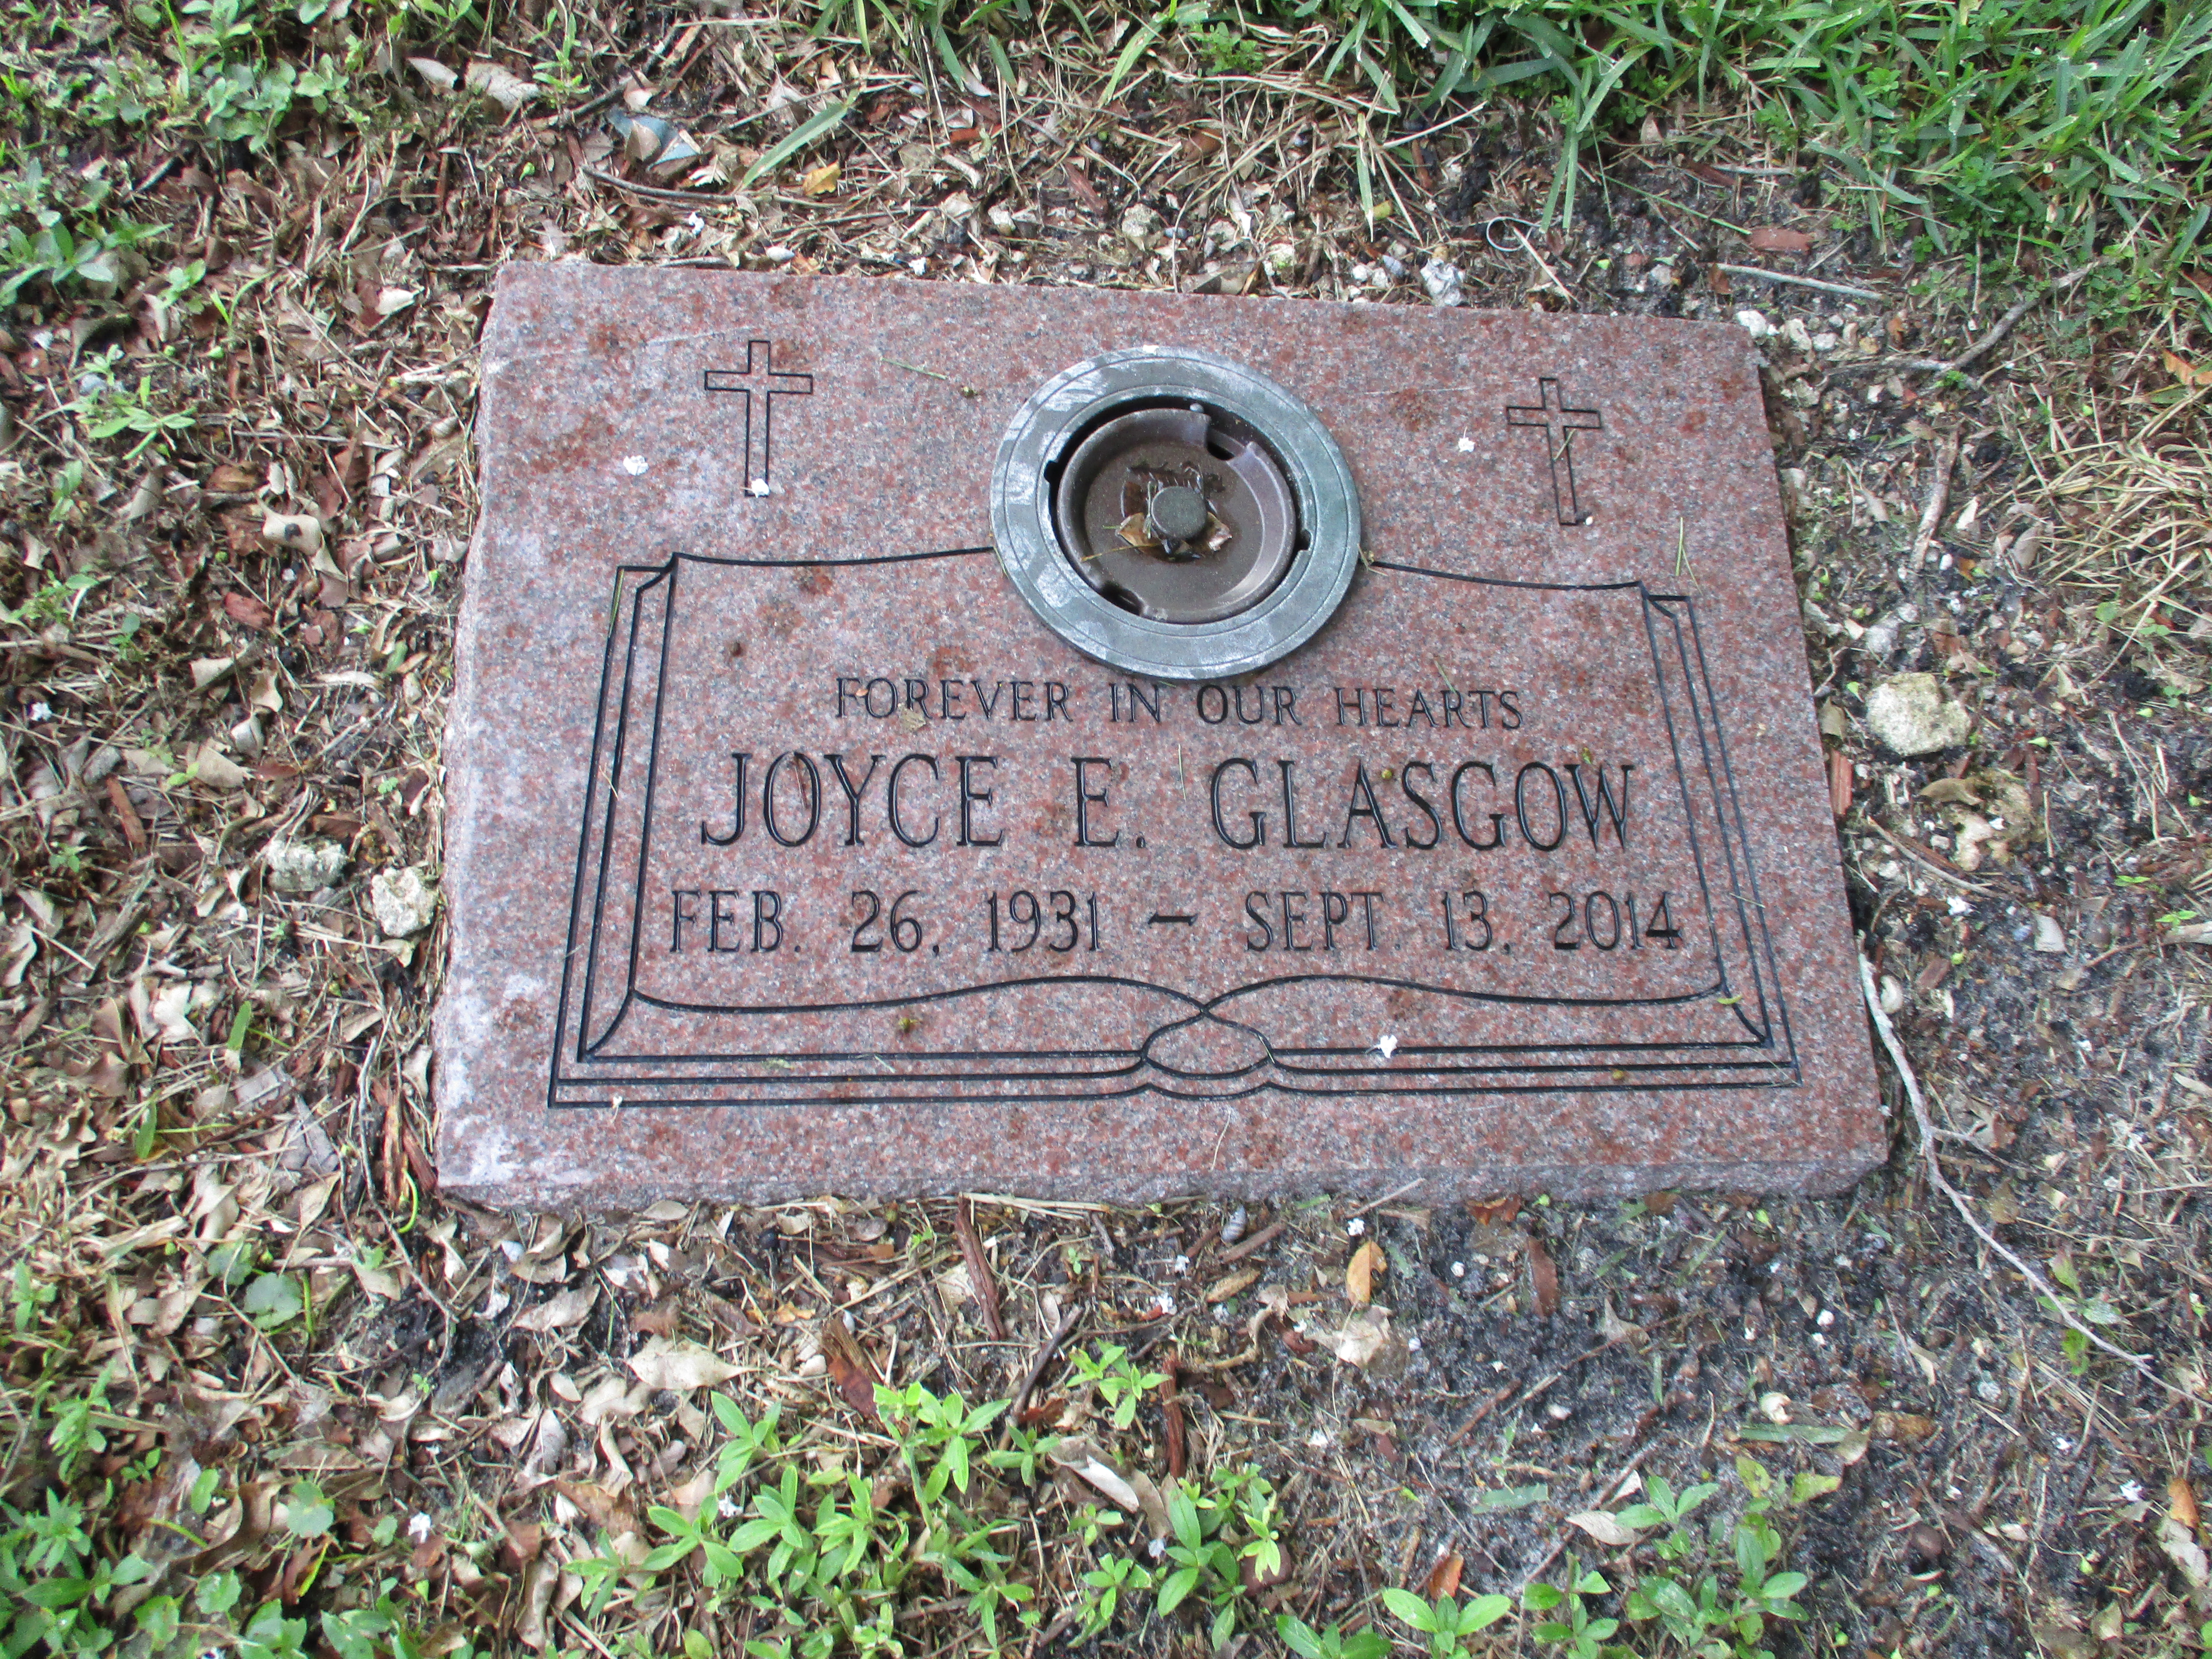 Joyce E Glasgow